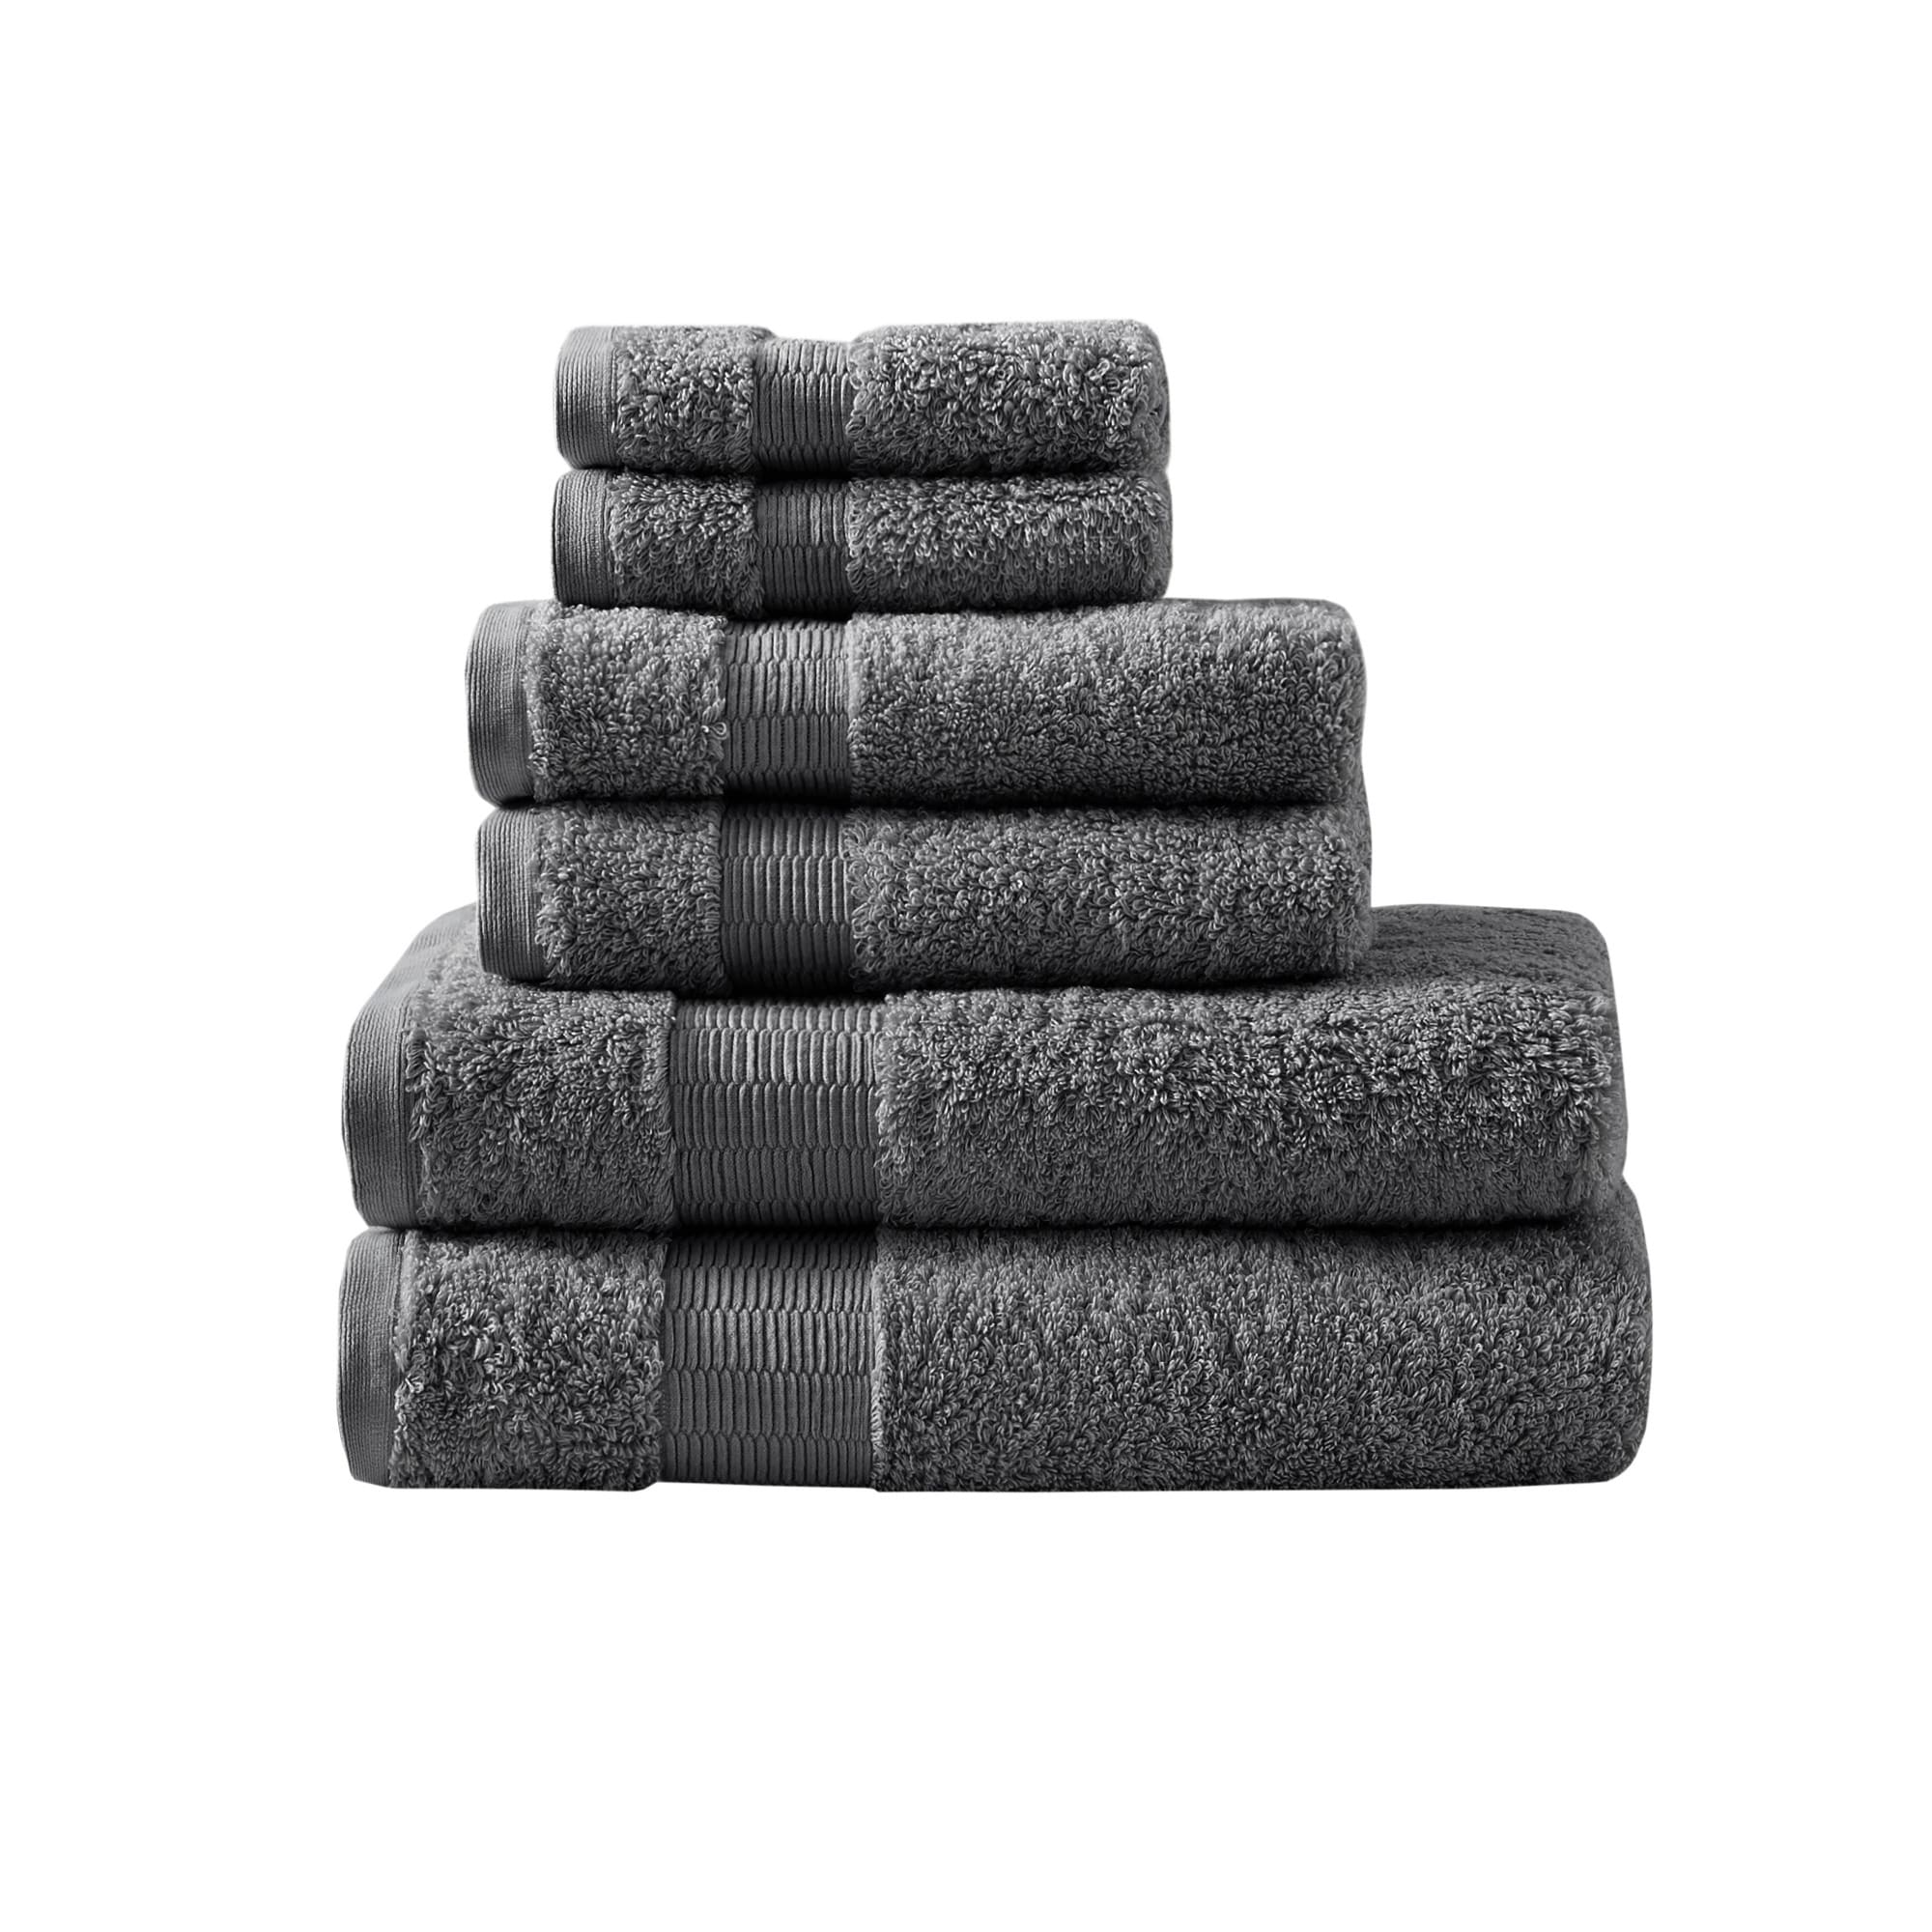 Yinrunx Bath Towels/Bath Towels Clearance Prime/Bath Towel/Bath